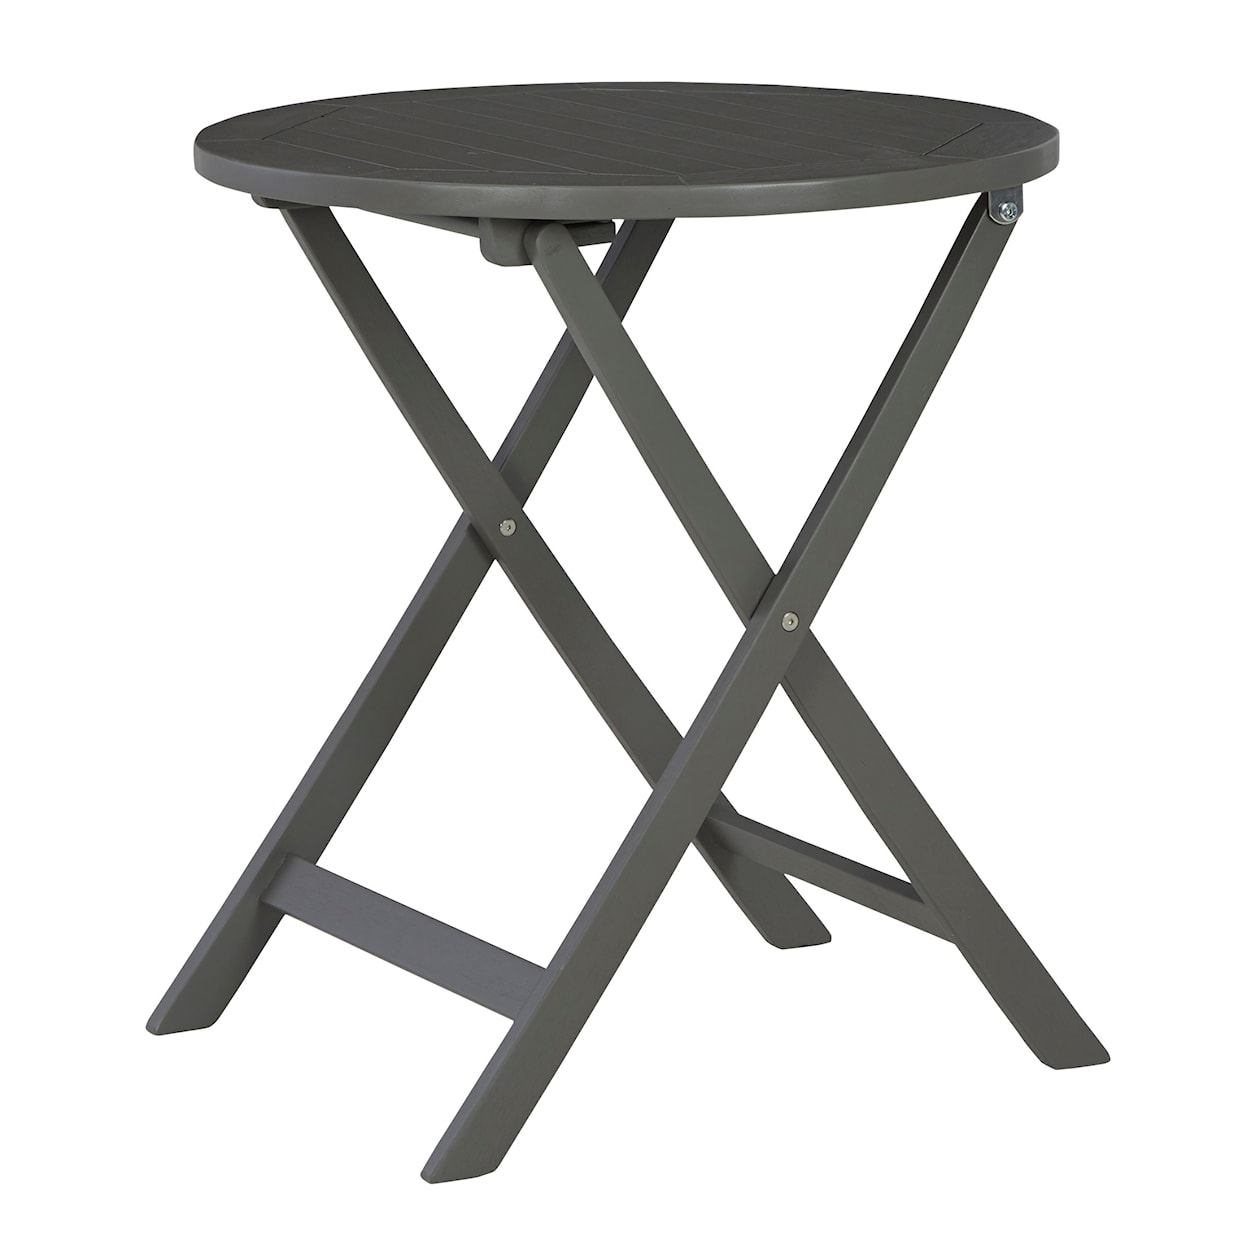 Signature Design Safari Peak Outdoor Table and Chairs (Set of 3)